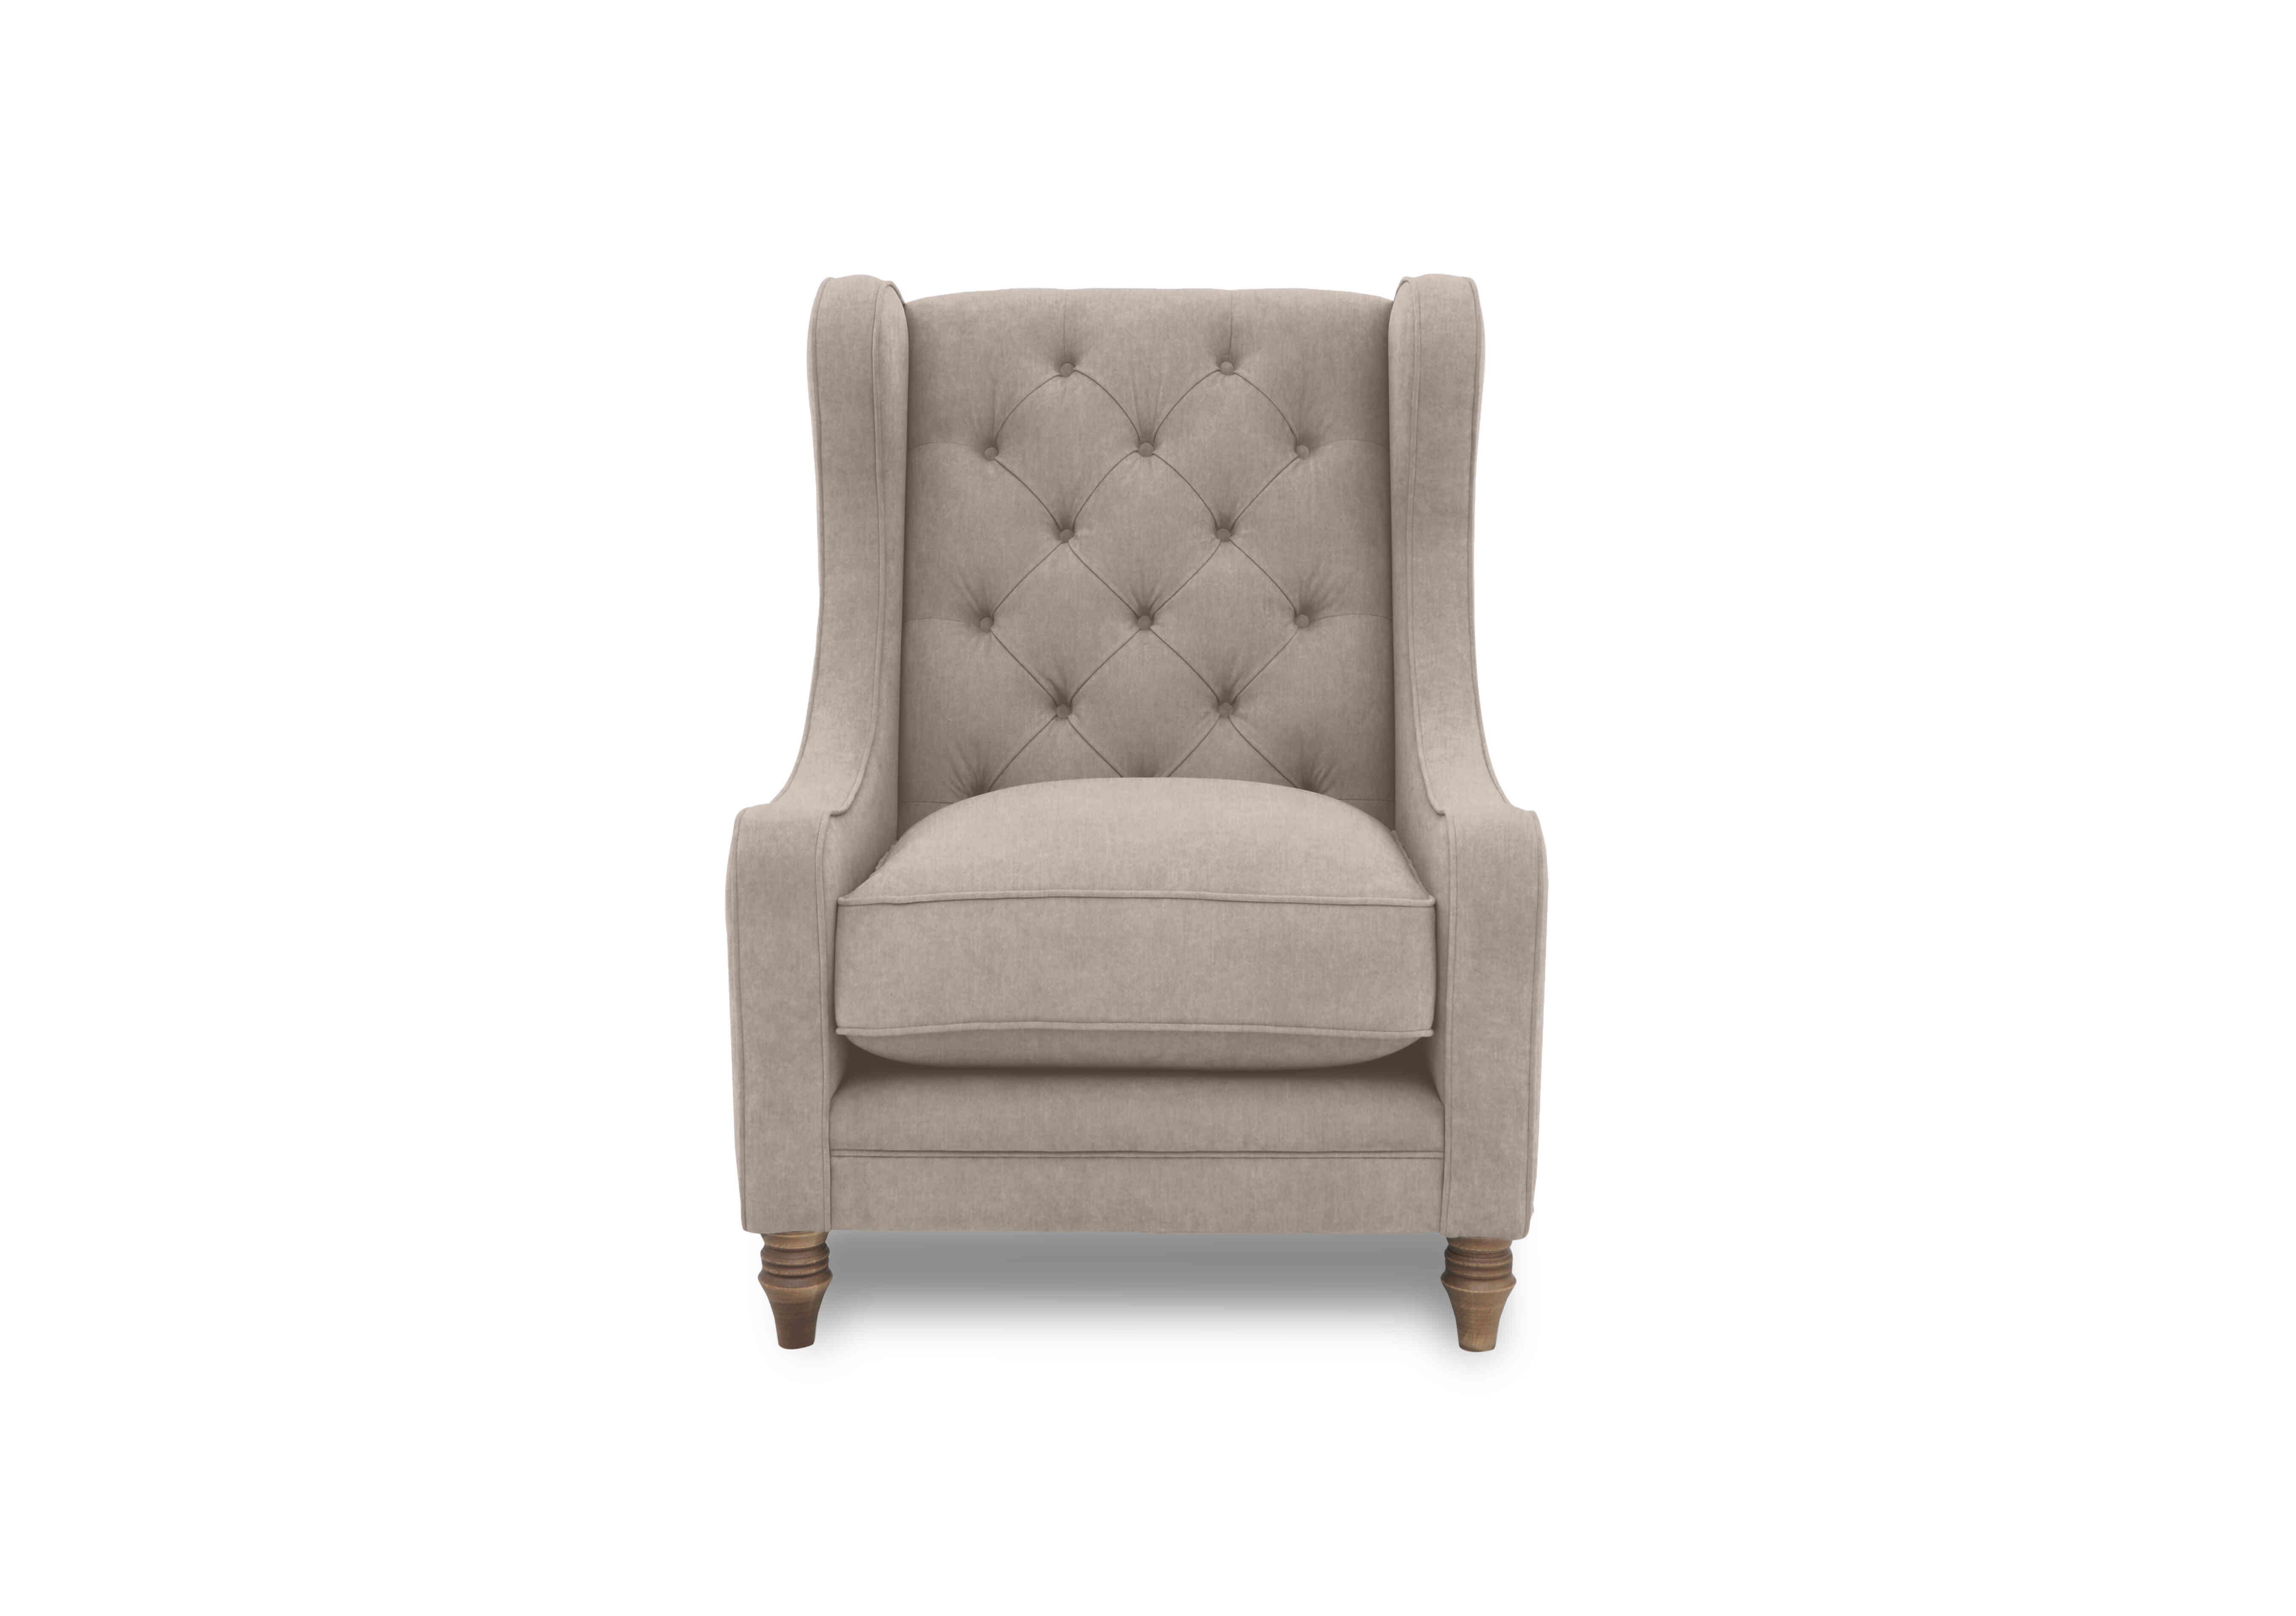 Blenheim Wing Chair in Darwin Mink Of on Furniture Village